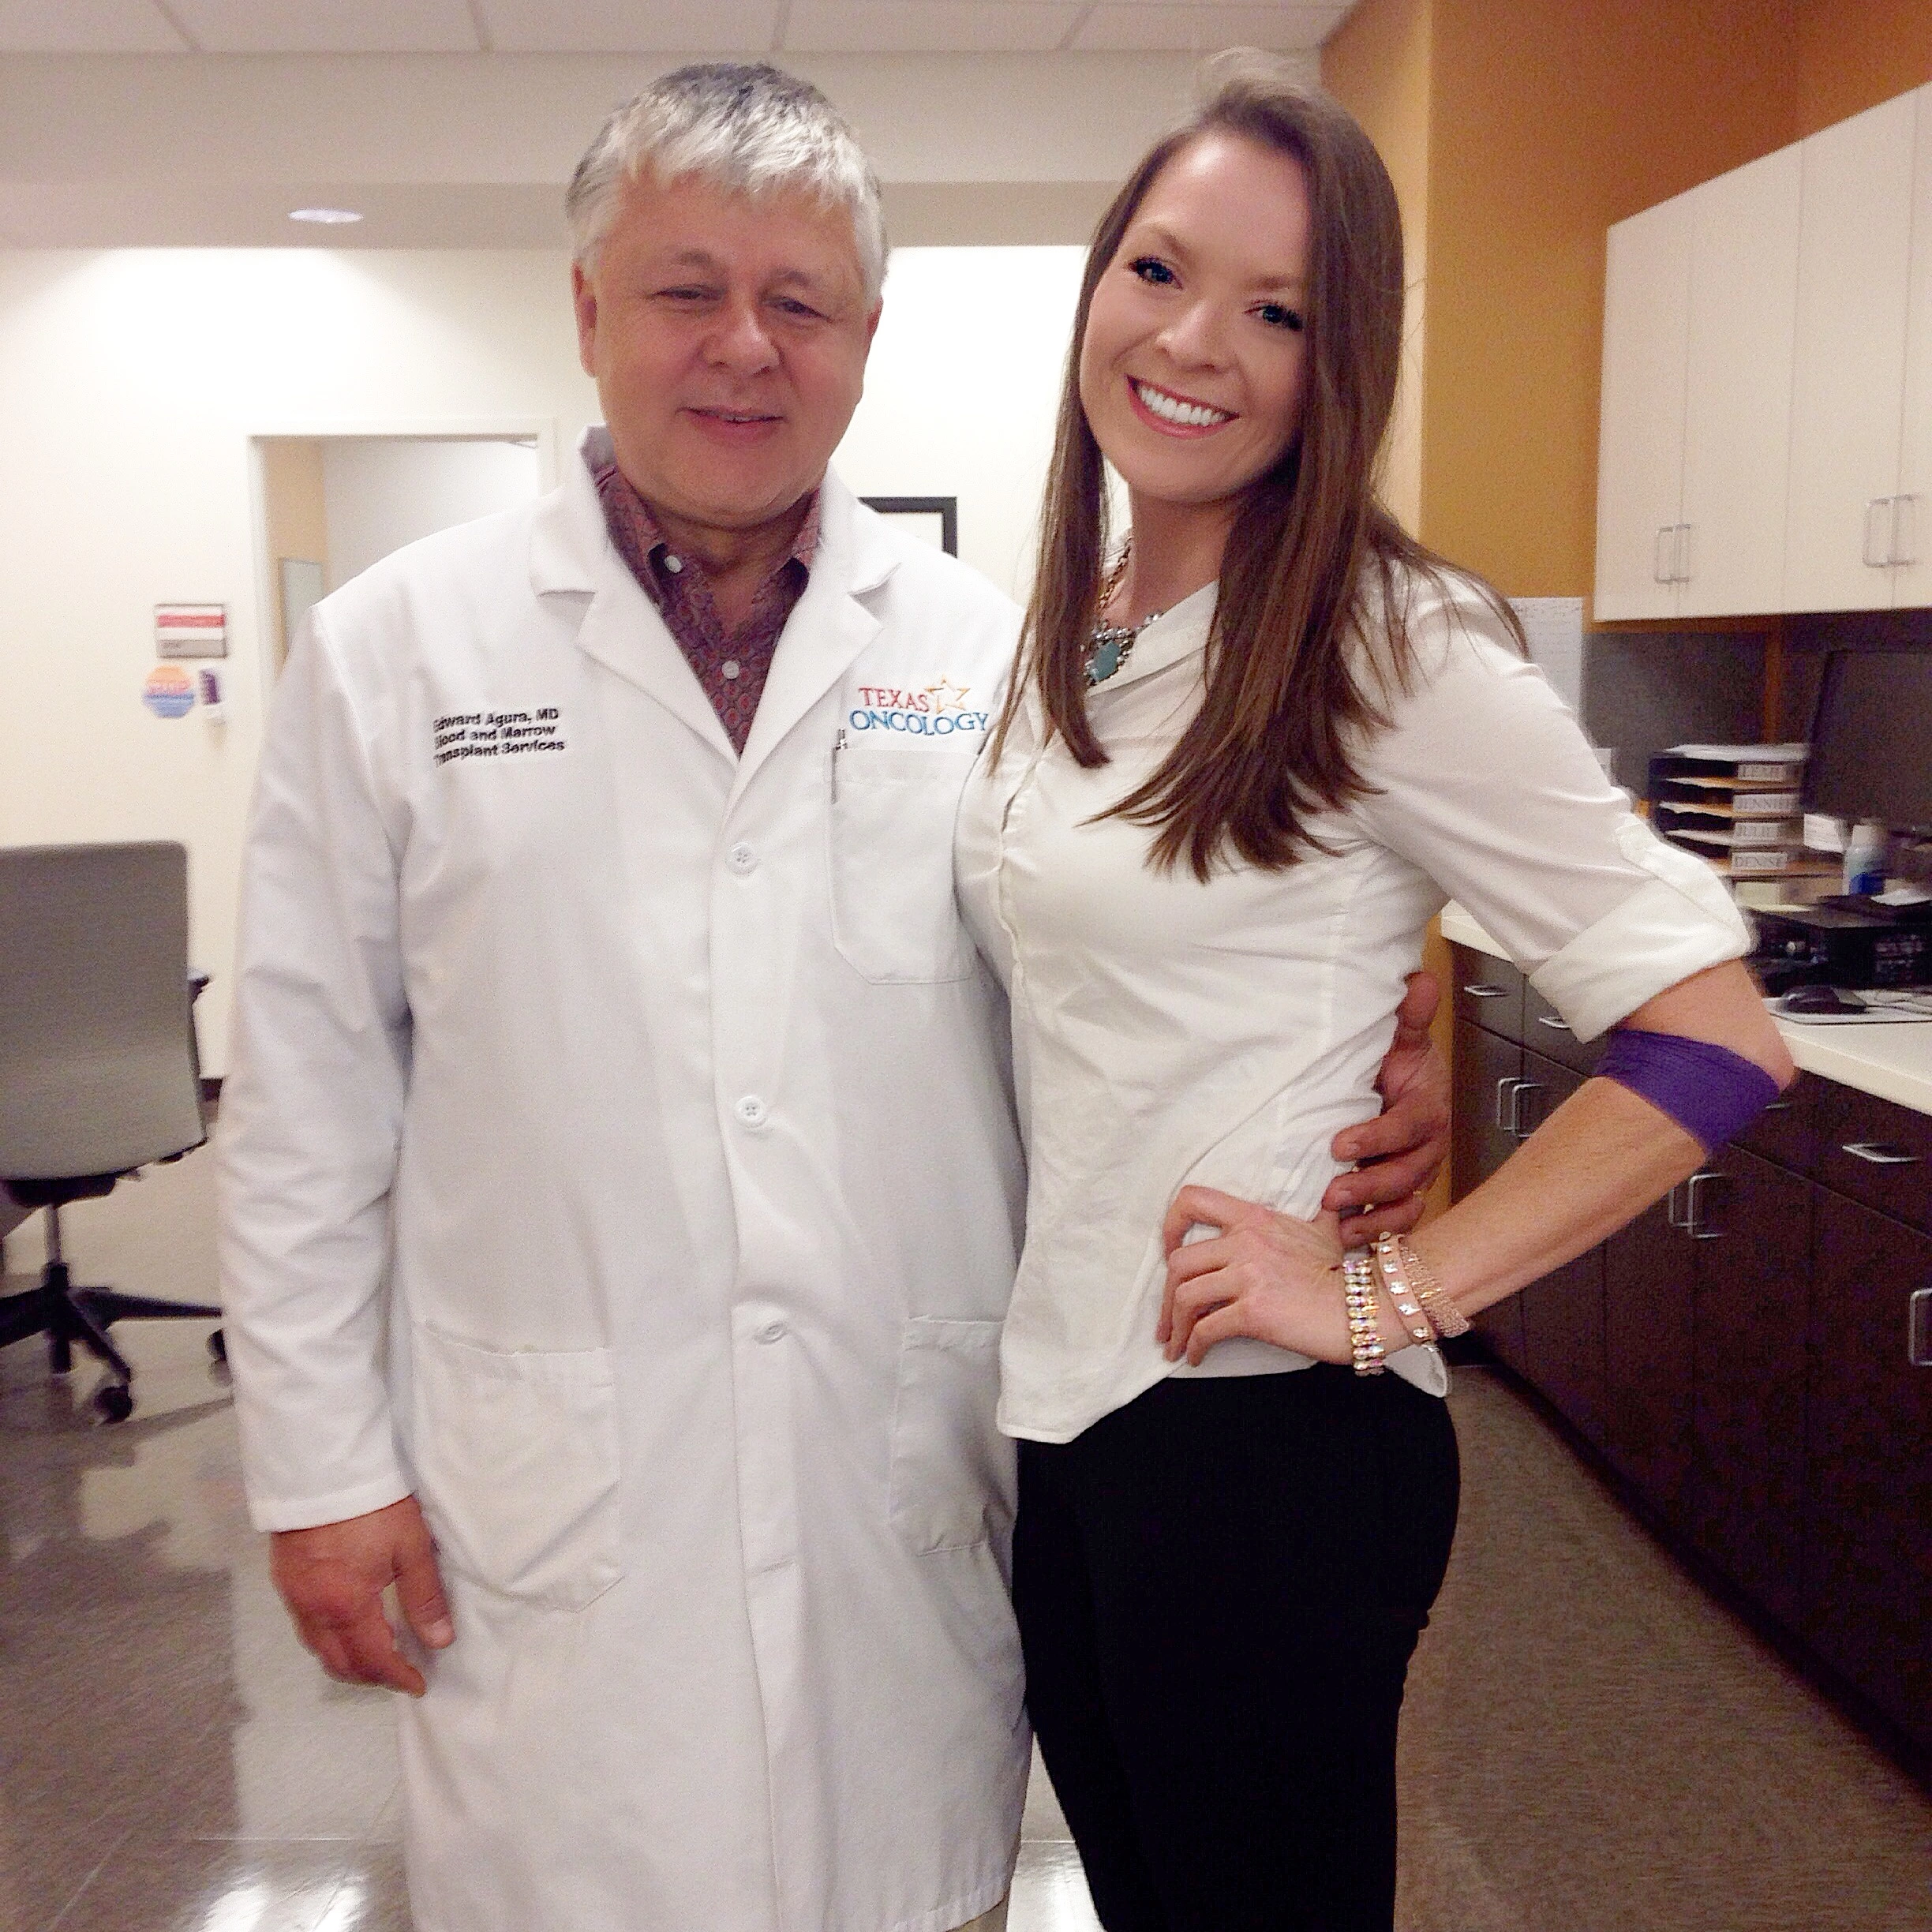 Dr. Edward Agura smiles next to his patient, Candice Stinnett.